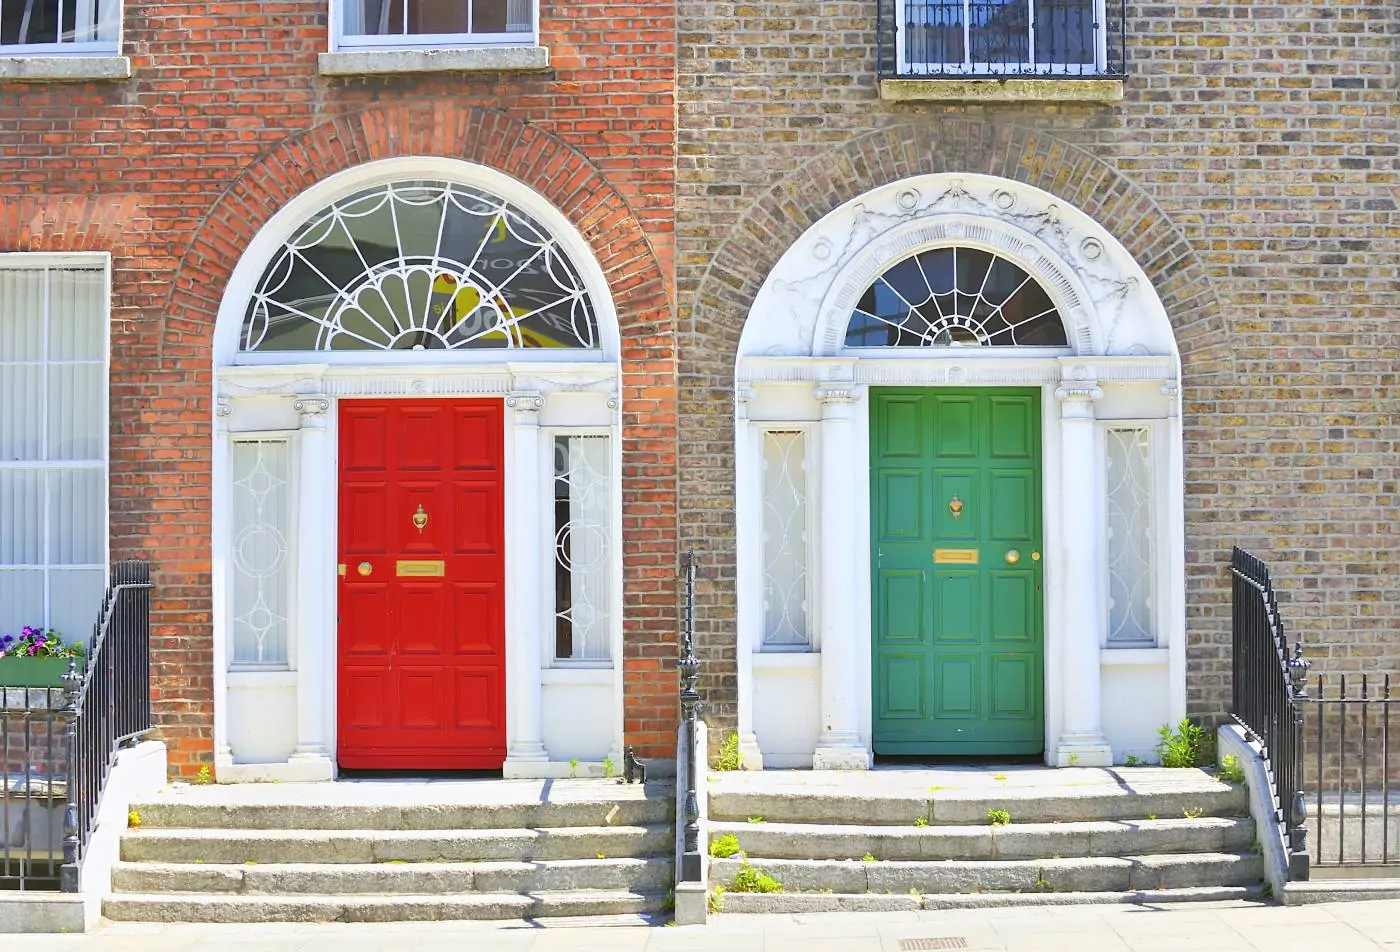 Georgian doors in Dublin's Merrion Square | c/o Deposit Photos.